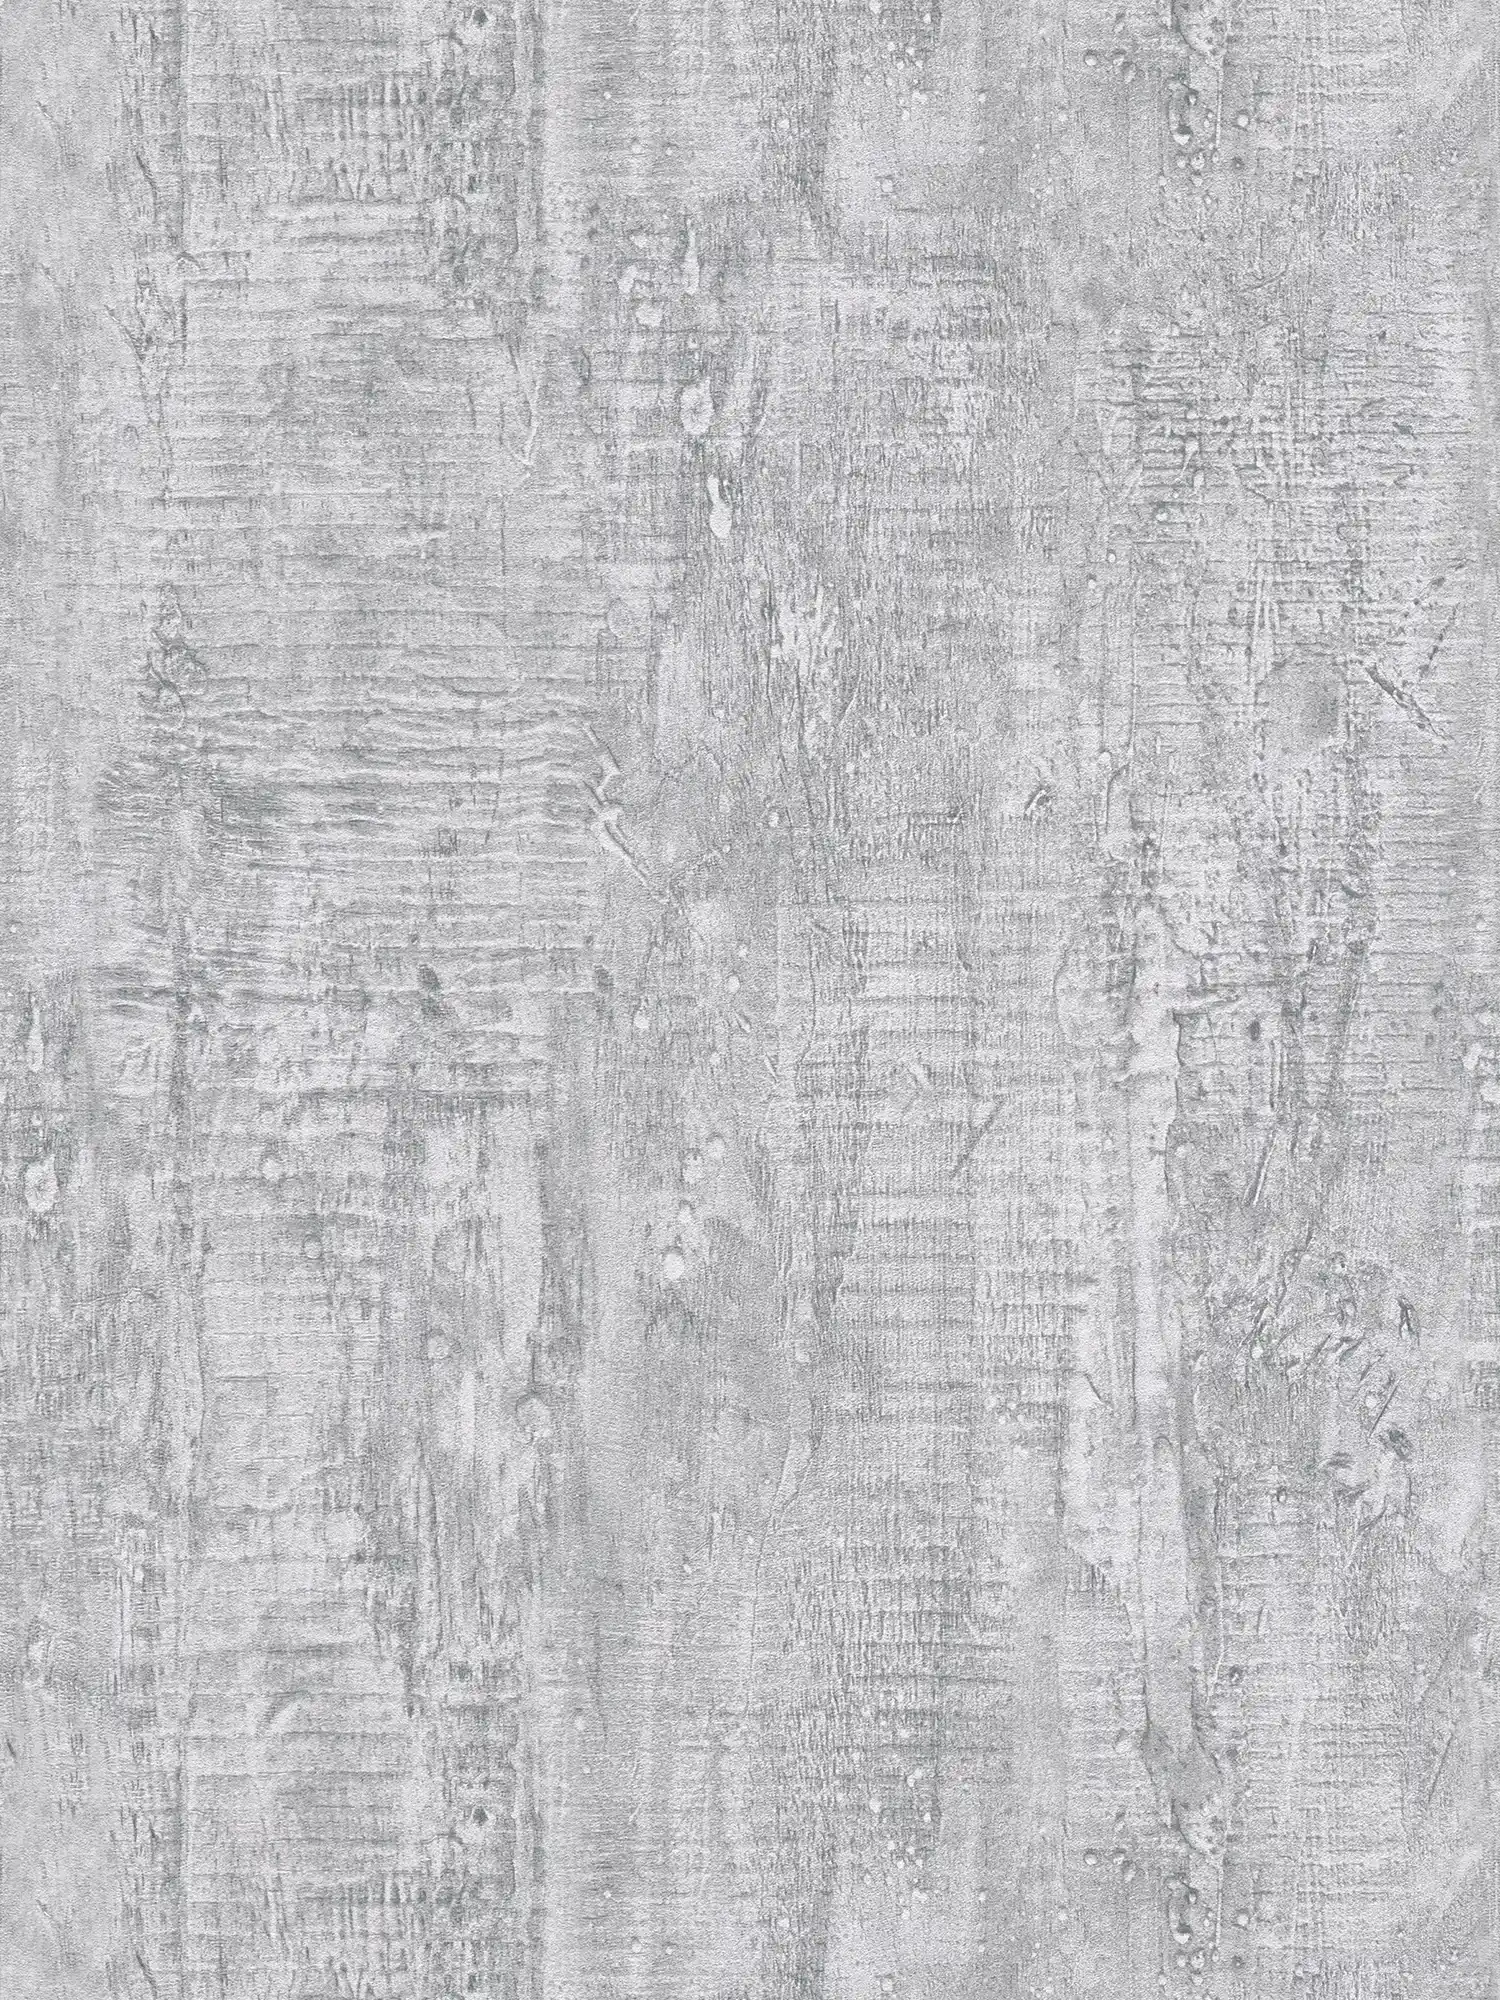 Rustic concrete look wallpaper for industrial design - grey
